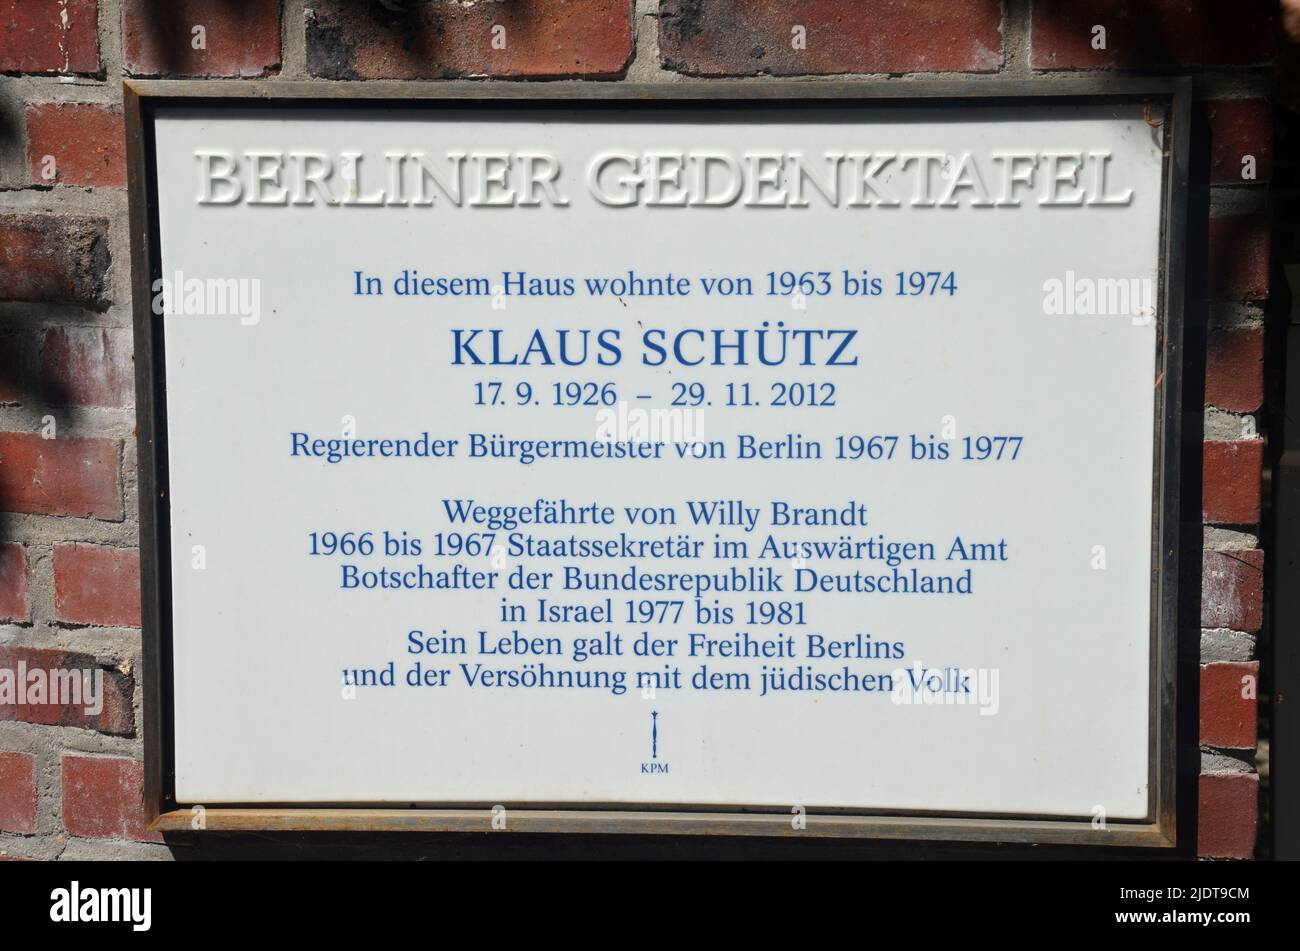 Berliner Gedenktafel, Klaus Schütz, Regierender Bürgermeister von Berlin, 1967 bis 1977 Foto de stock